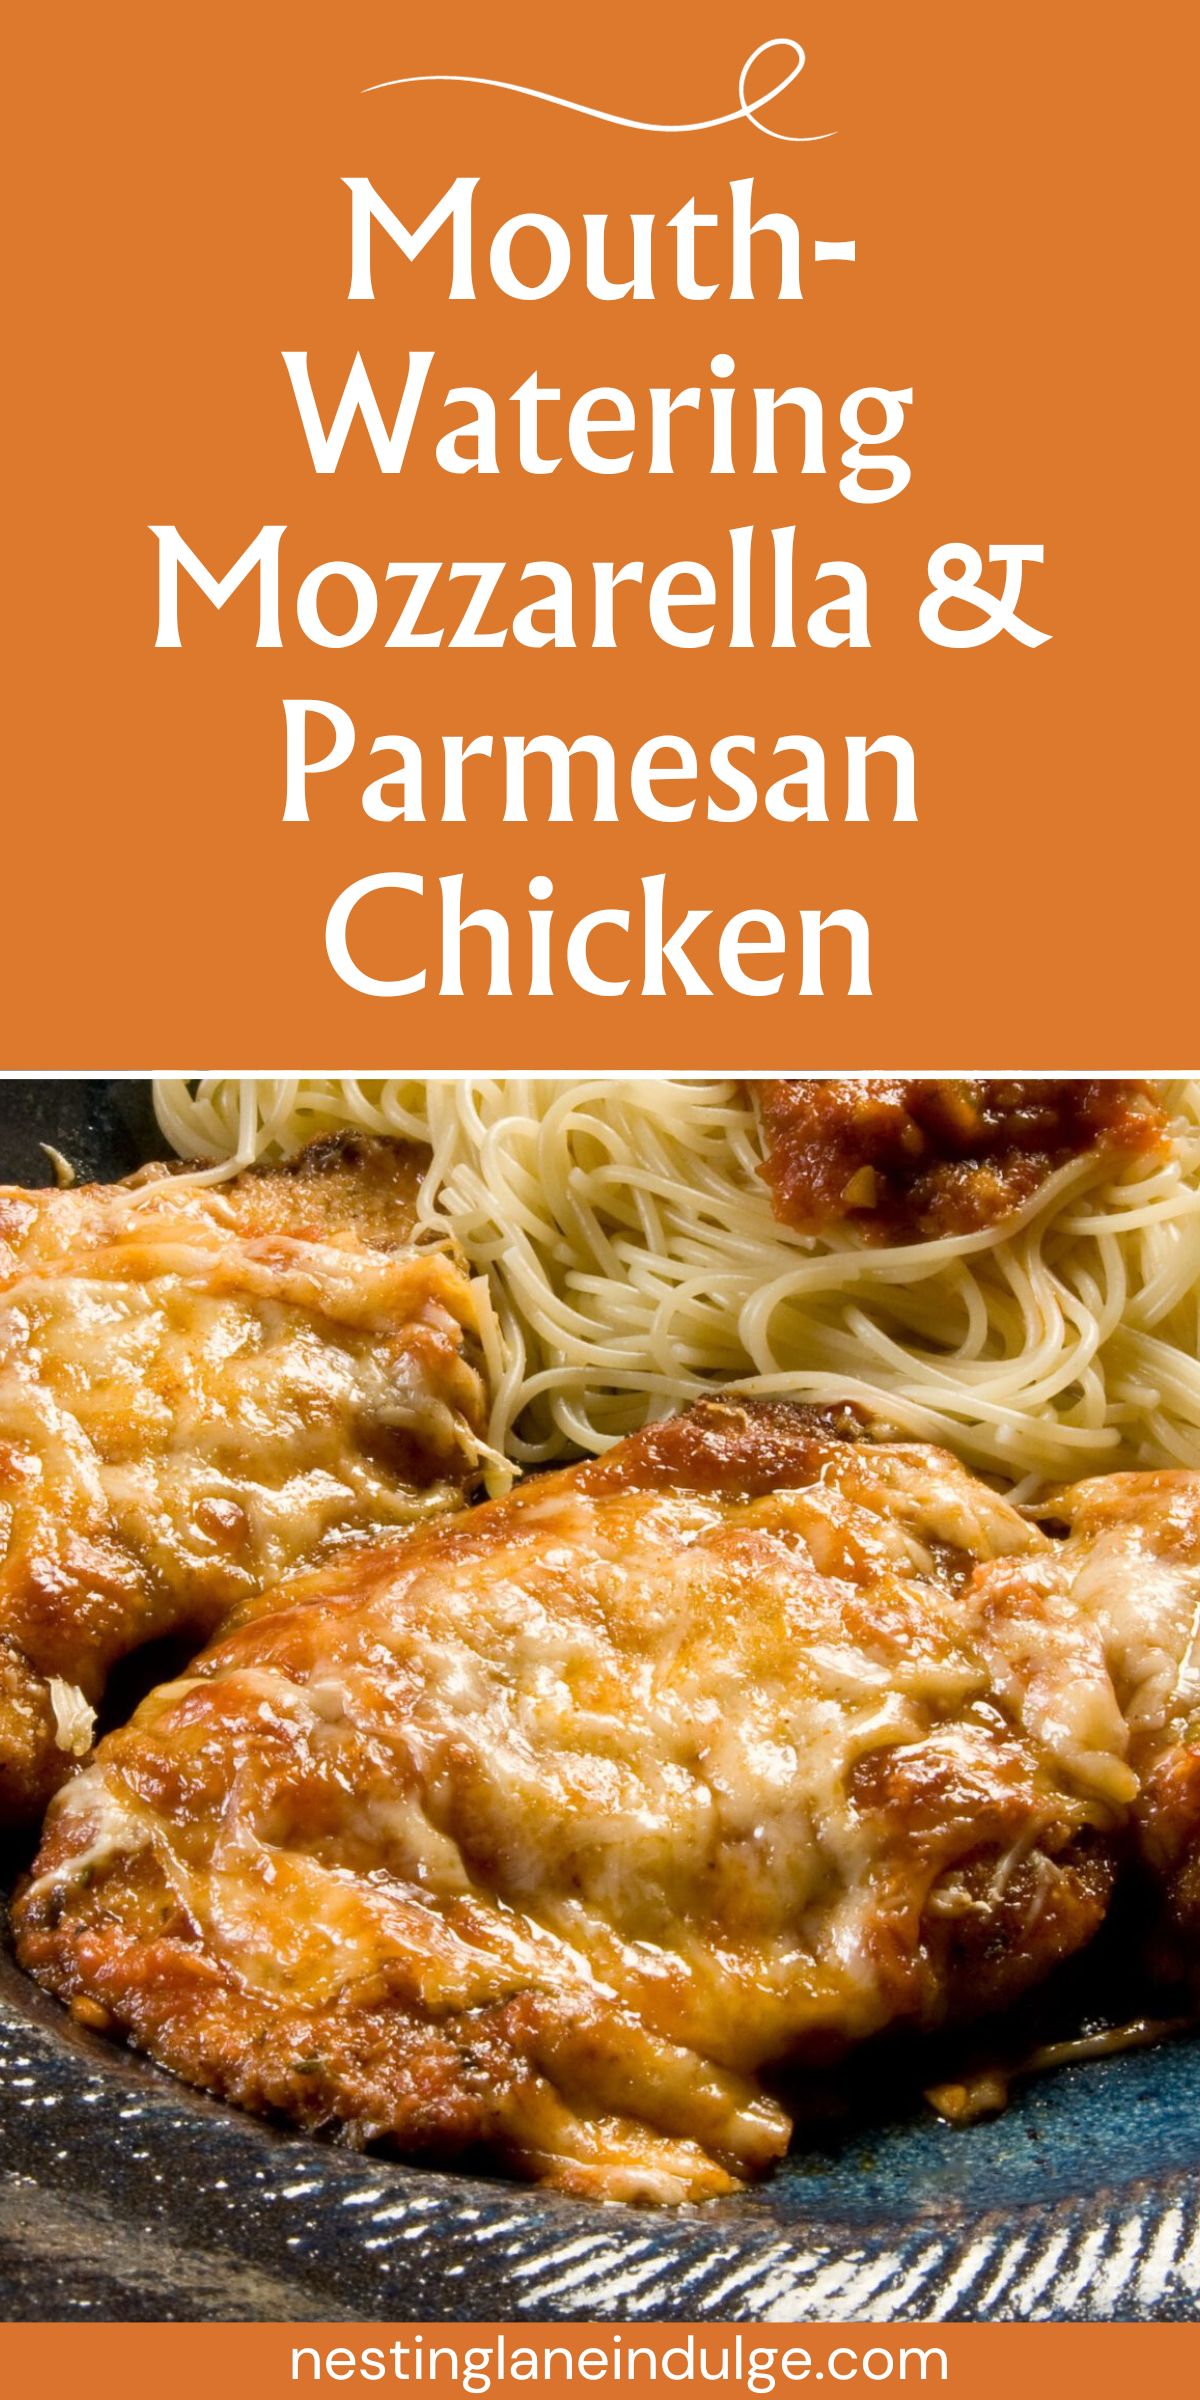 Mouth-Watering Mozzarella & Parmesan Chicken Graphic